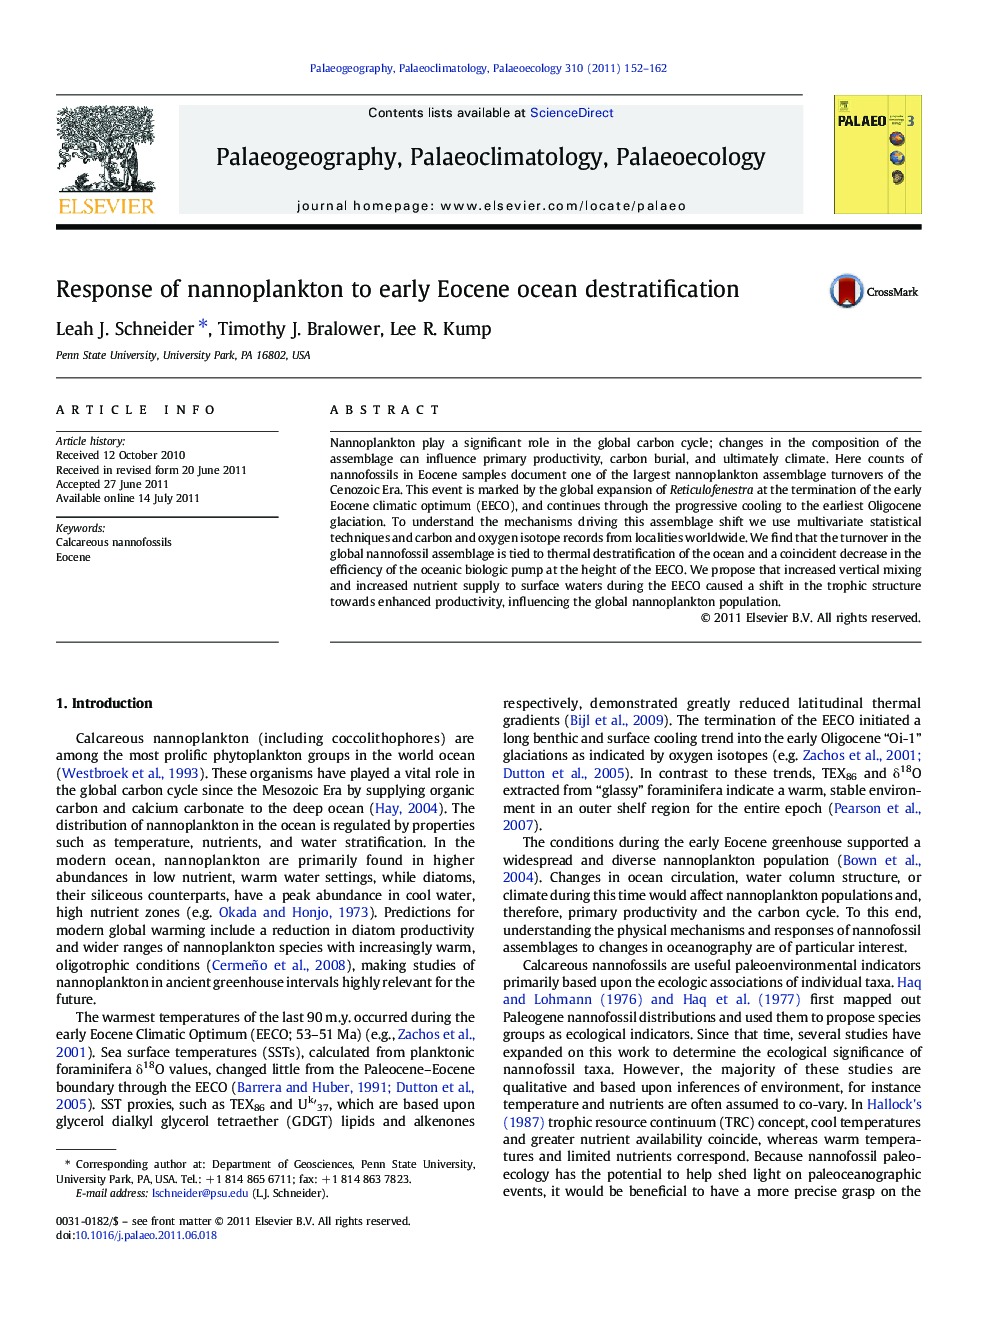 Response of nannoplankton to early Eocene ocean destratification